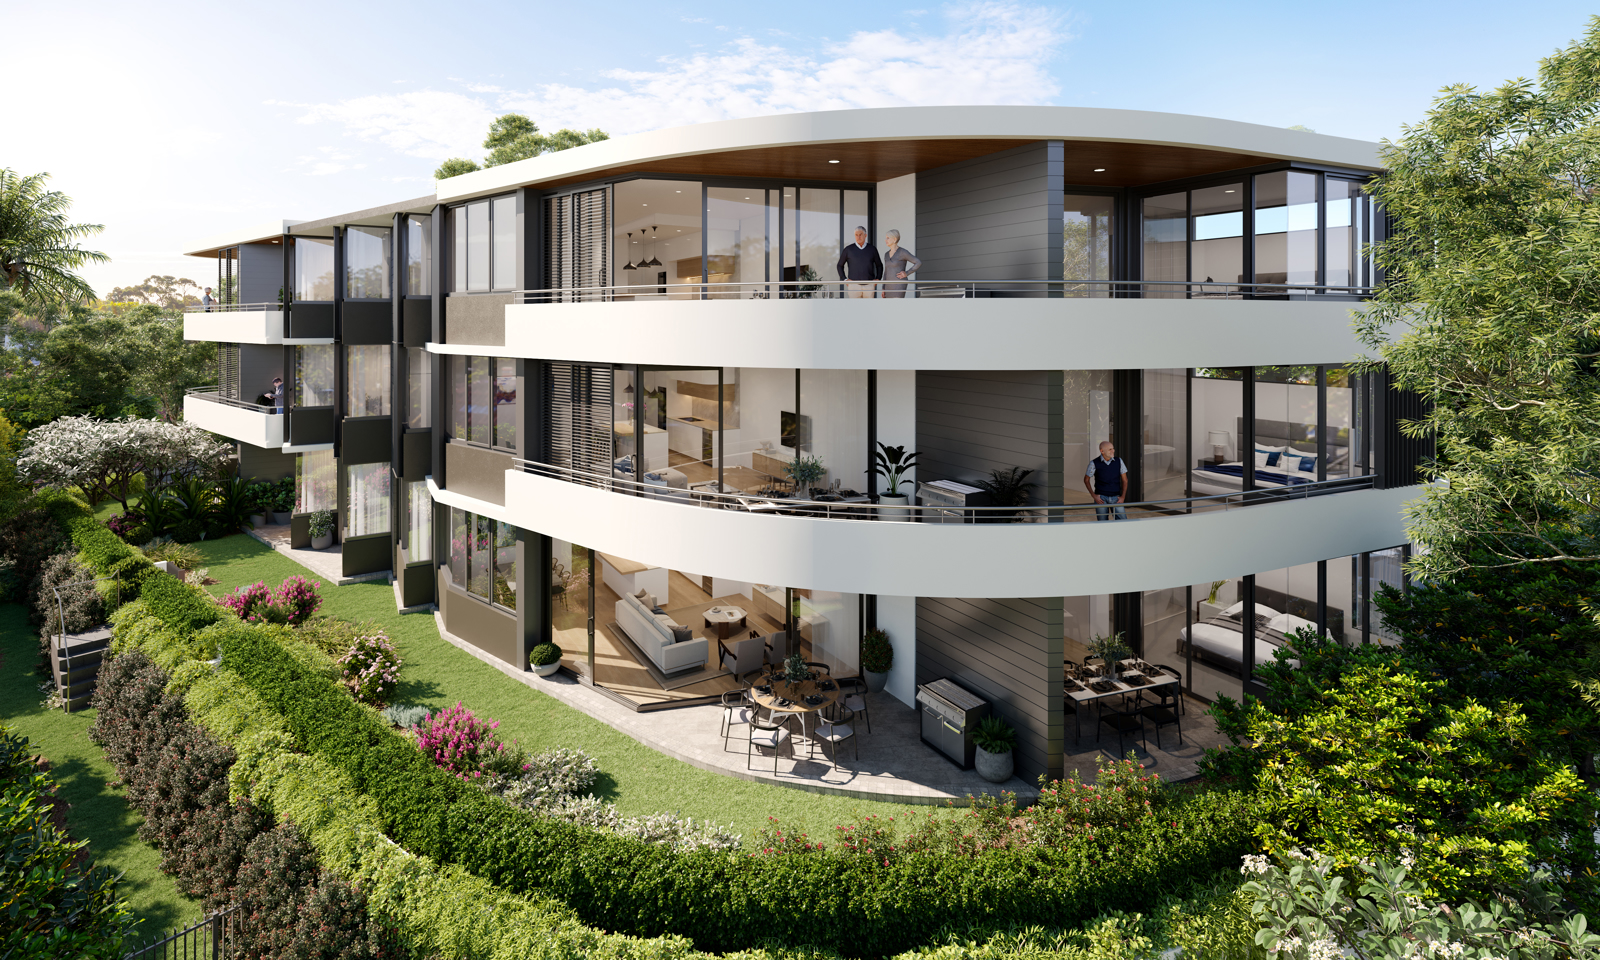 Sonnet Mosman - Helm's Latest Luxury Apartment Development